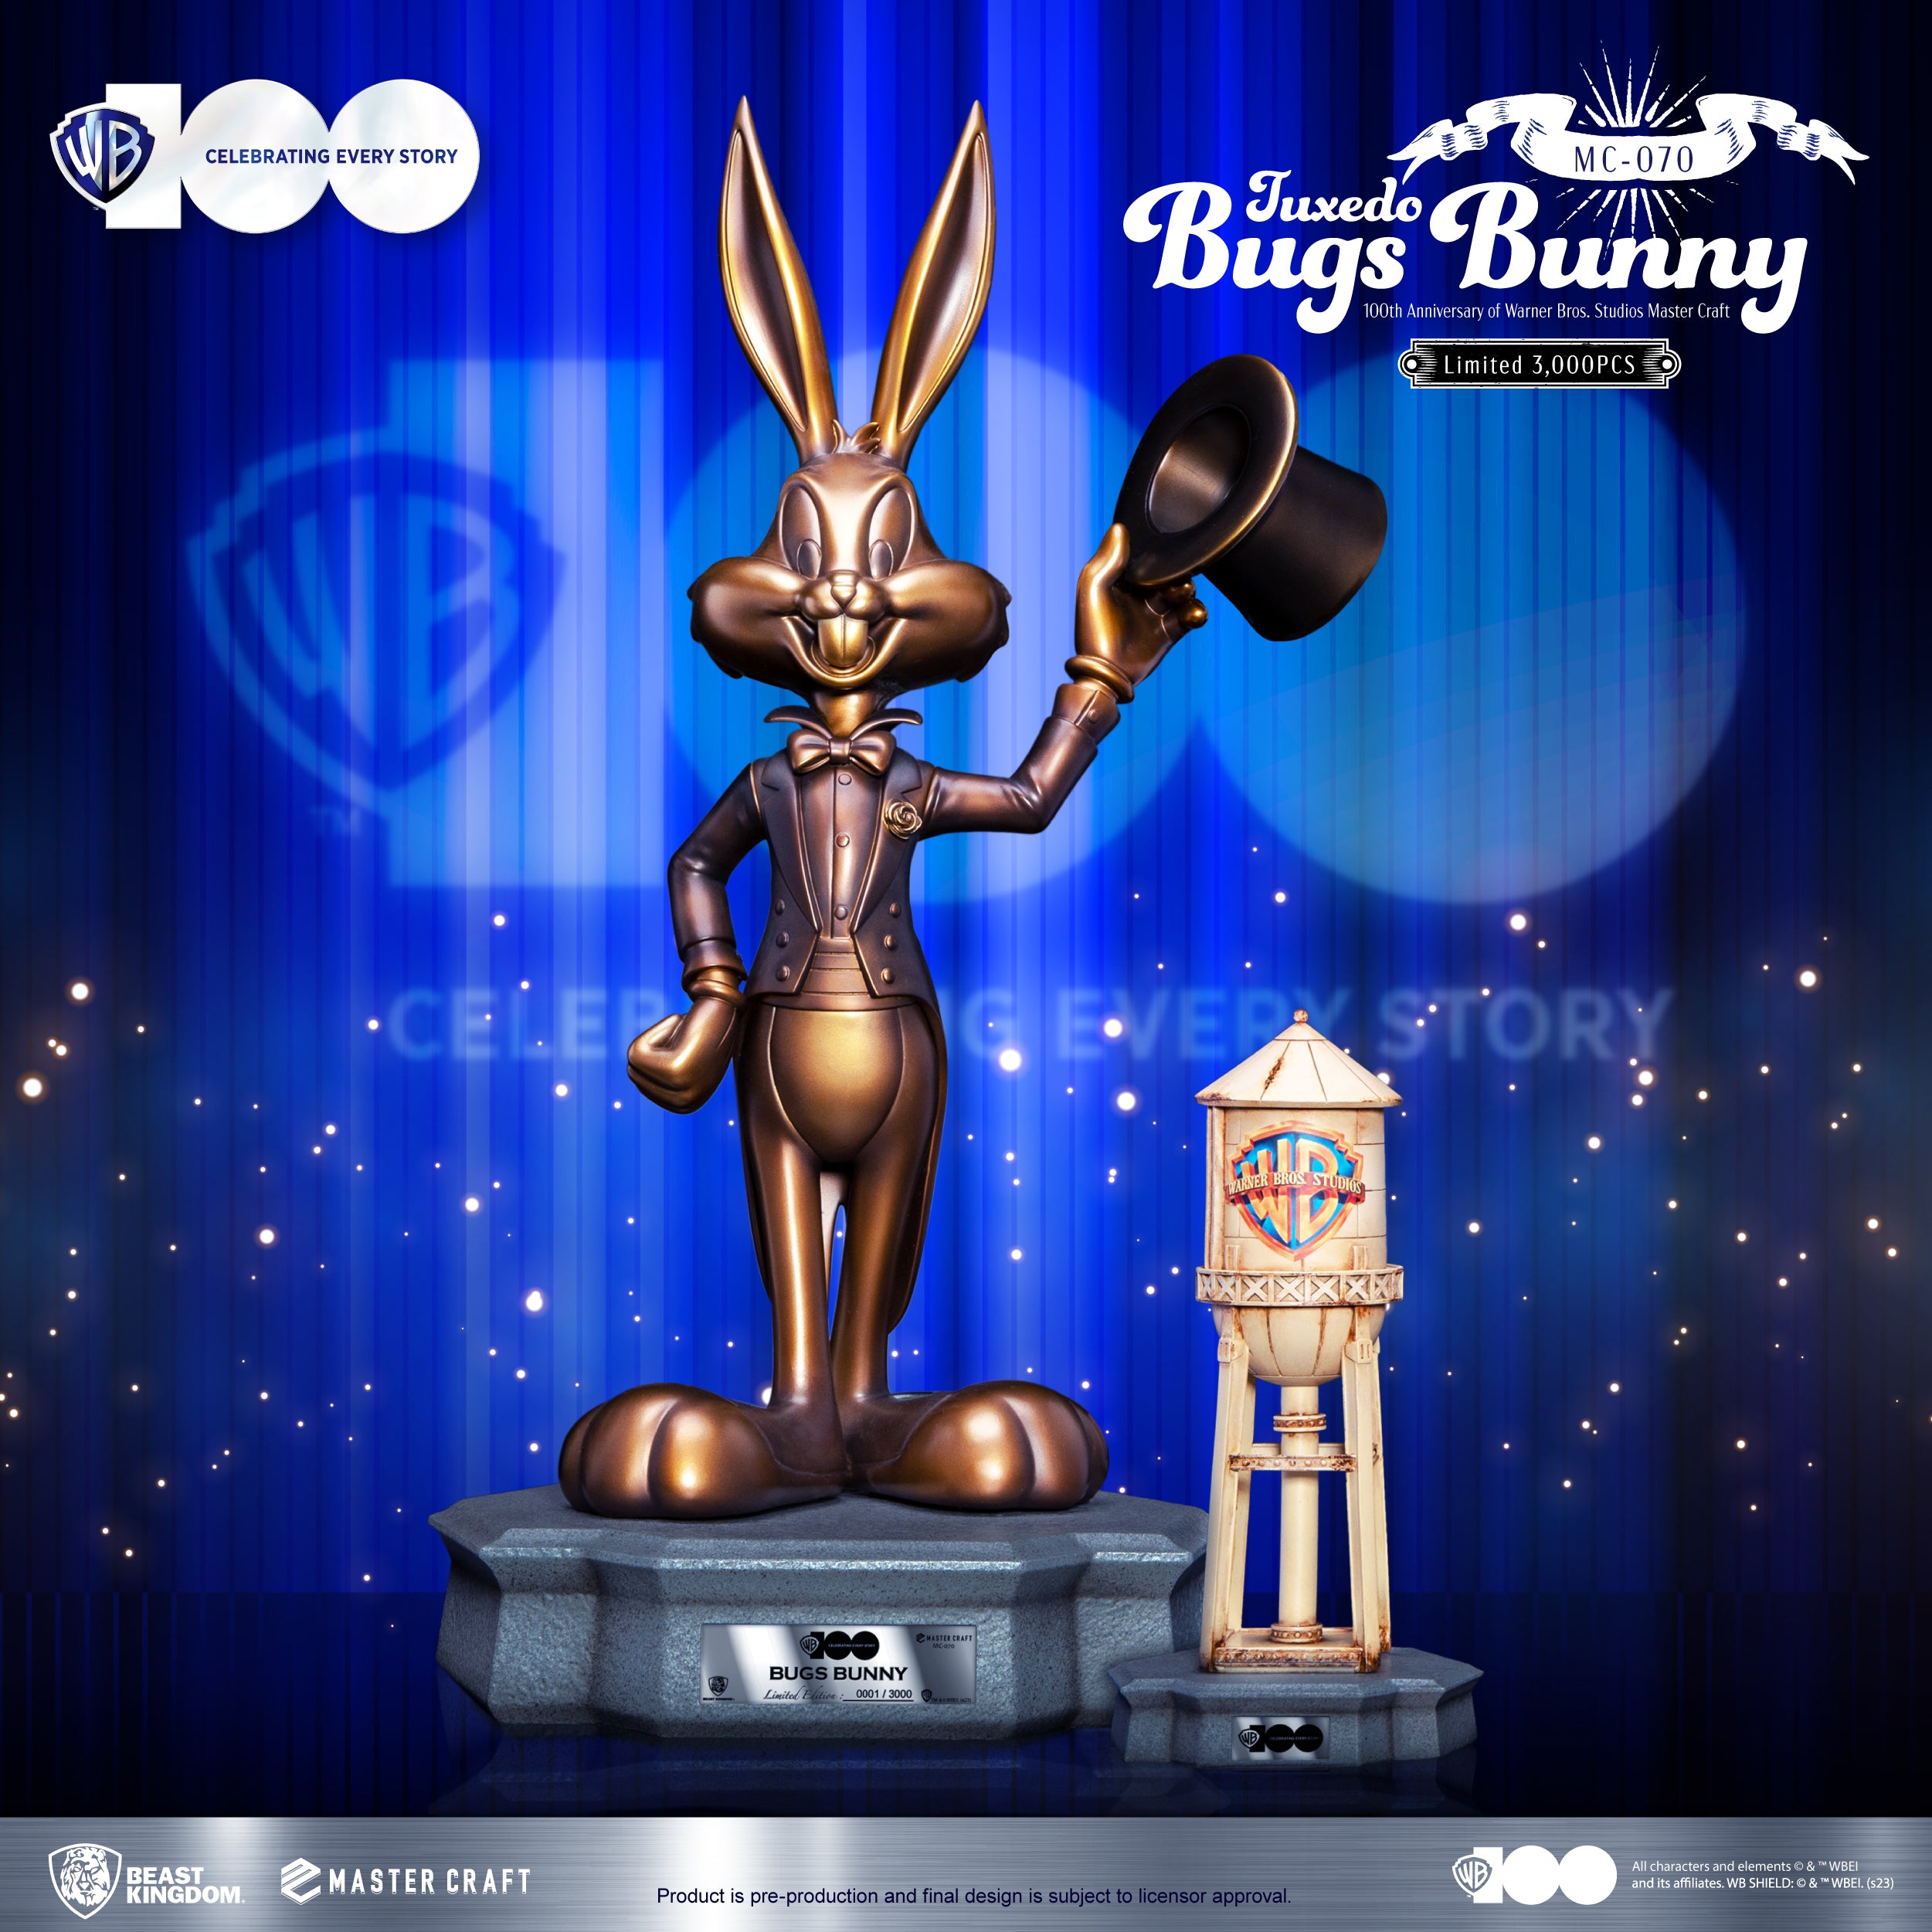 Beast Kingdom MC-070 100th Anniversary of Warner Bros. Studios Tuxedo Bugs Bunny 1:4 Scale Master Craft Figure Statue